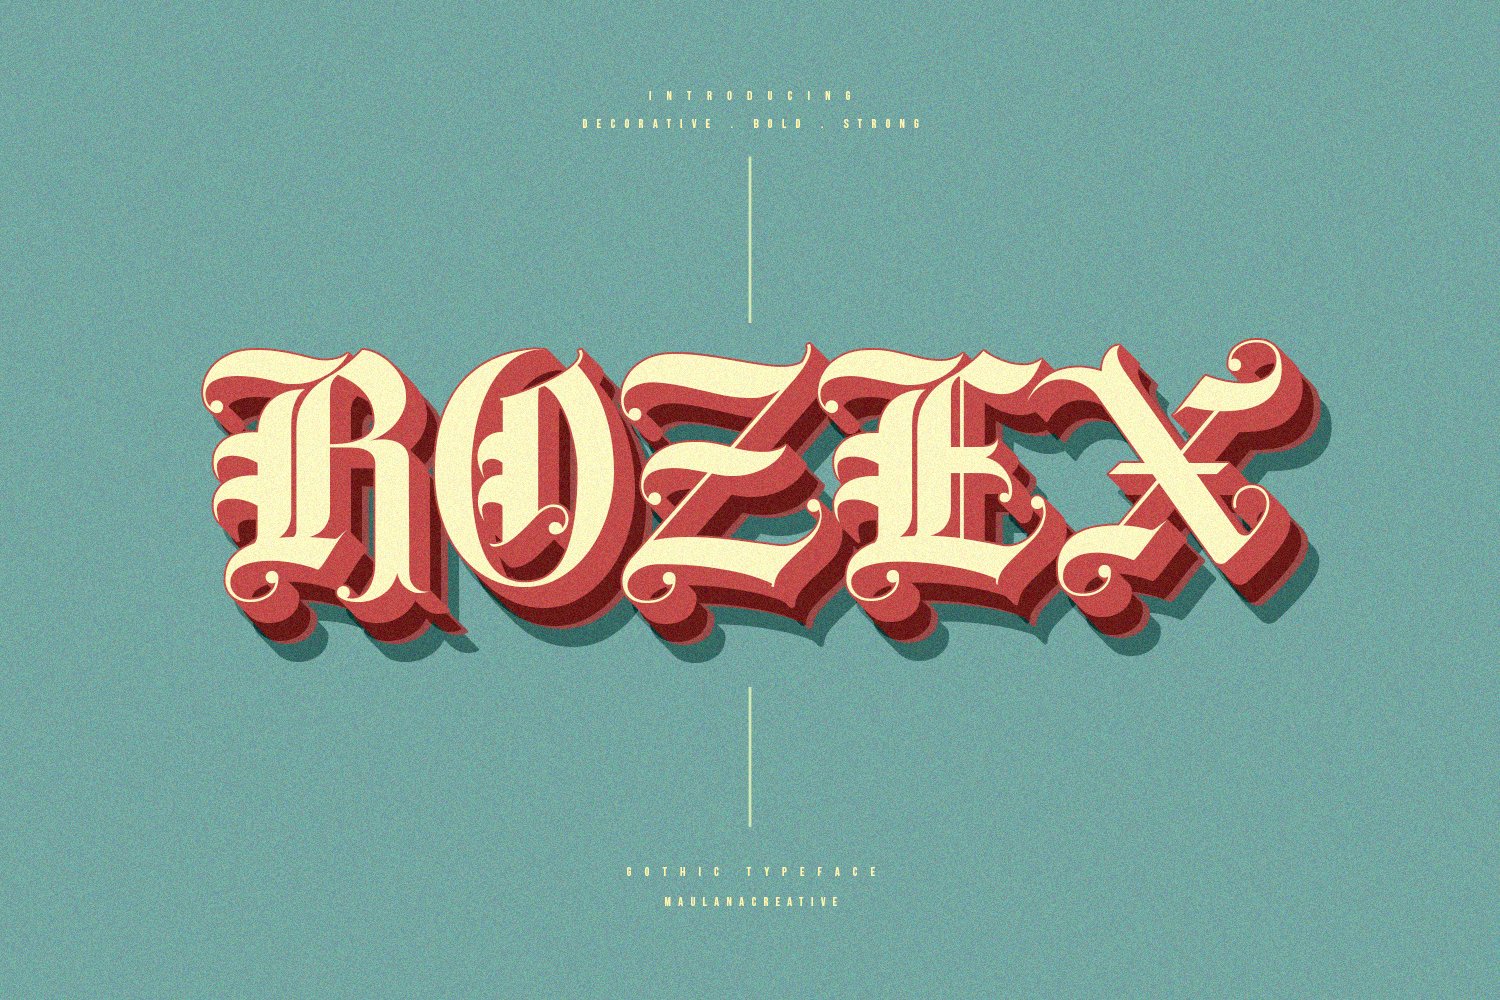 Rozex - Bold Decorative Gothic Font cover image.